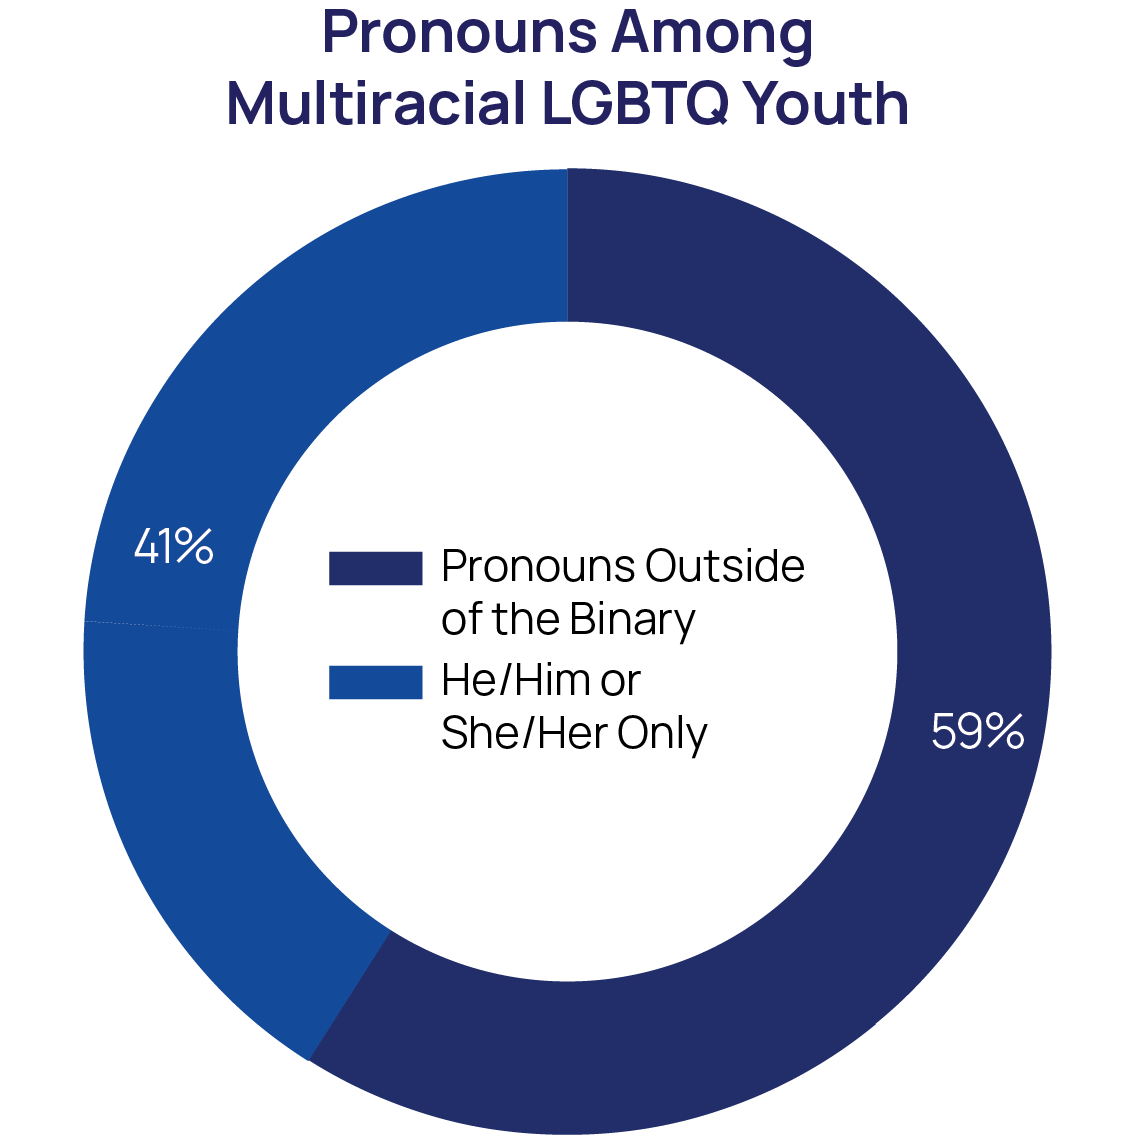 Pronouns among Multiracial LGBTQ Youth